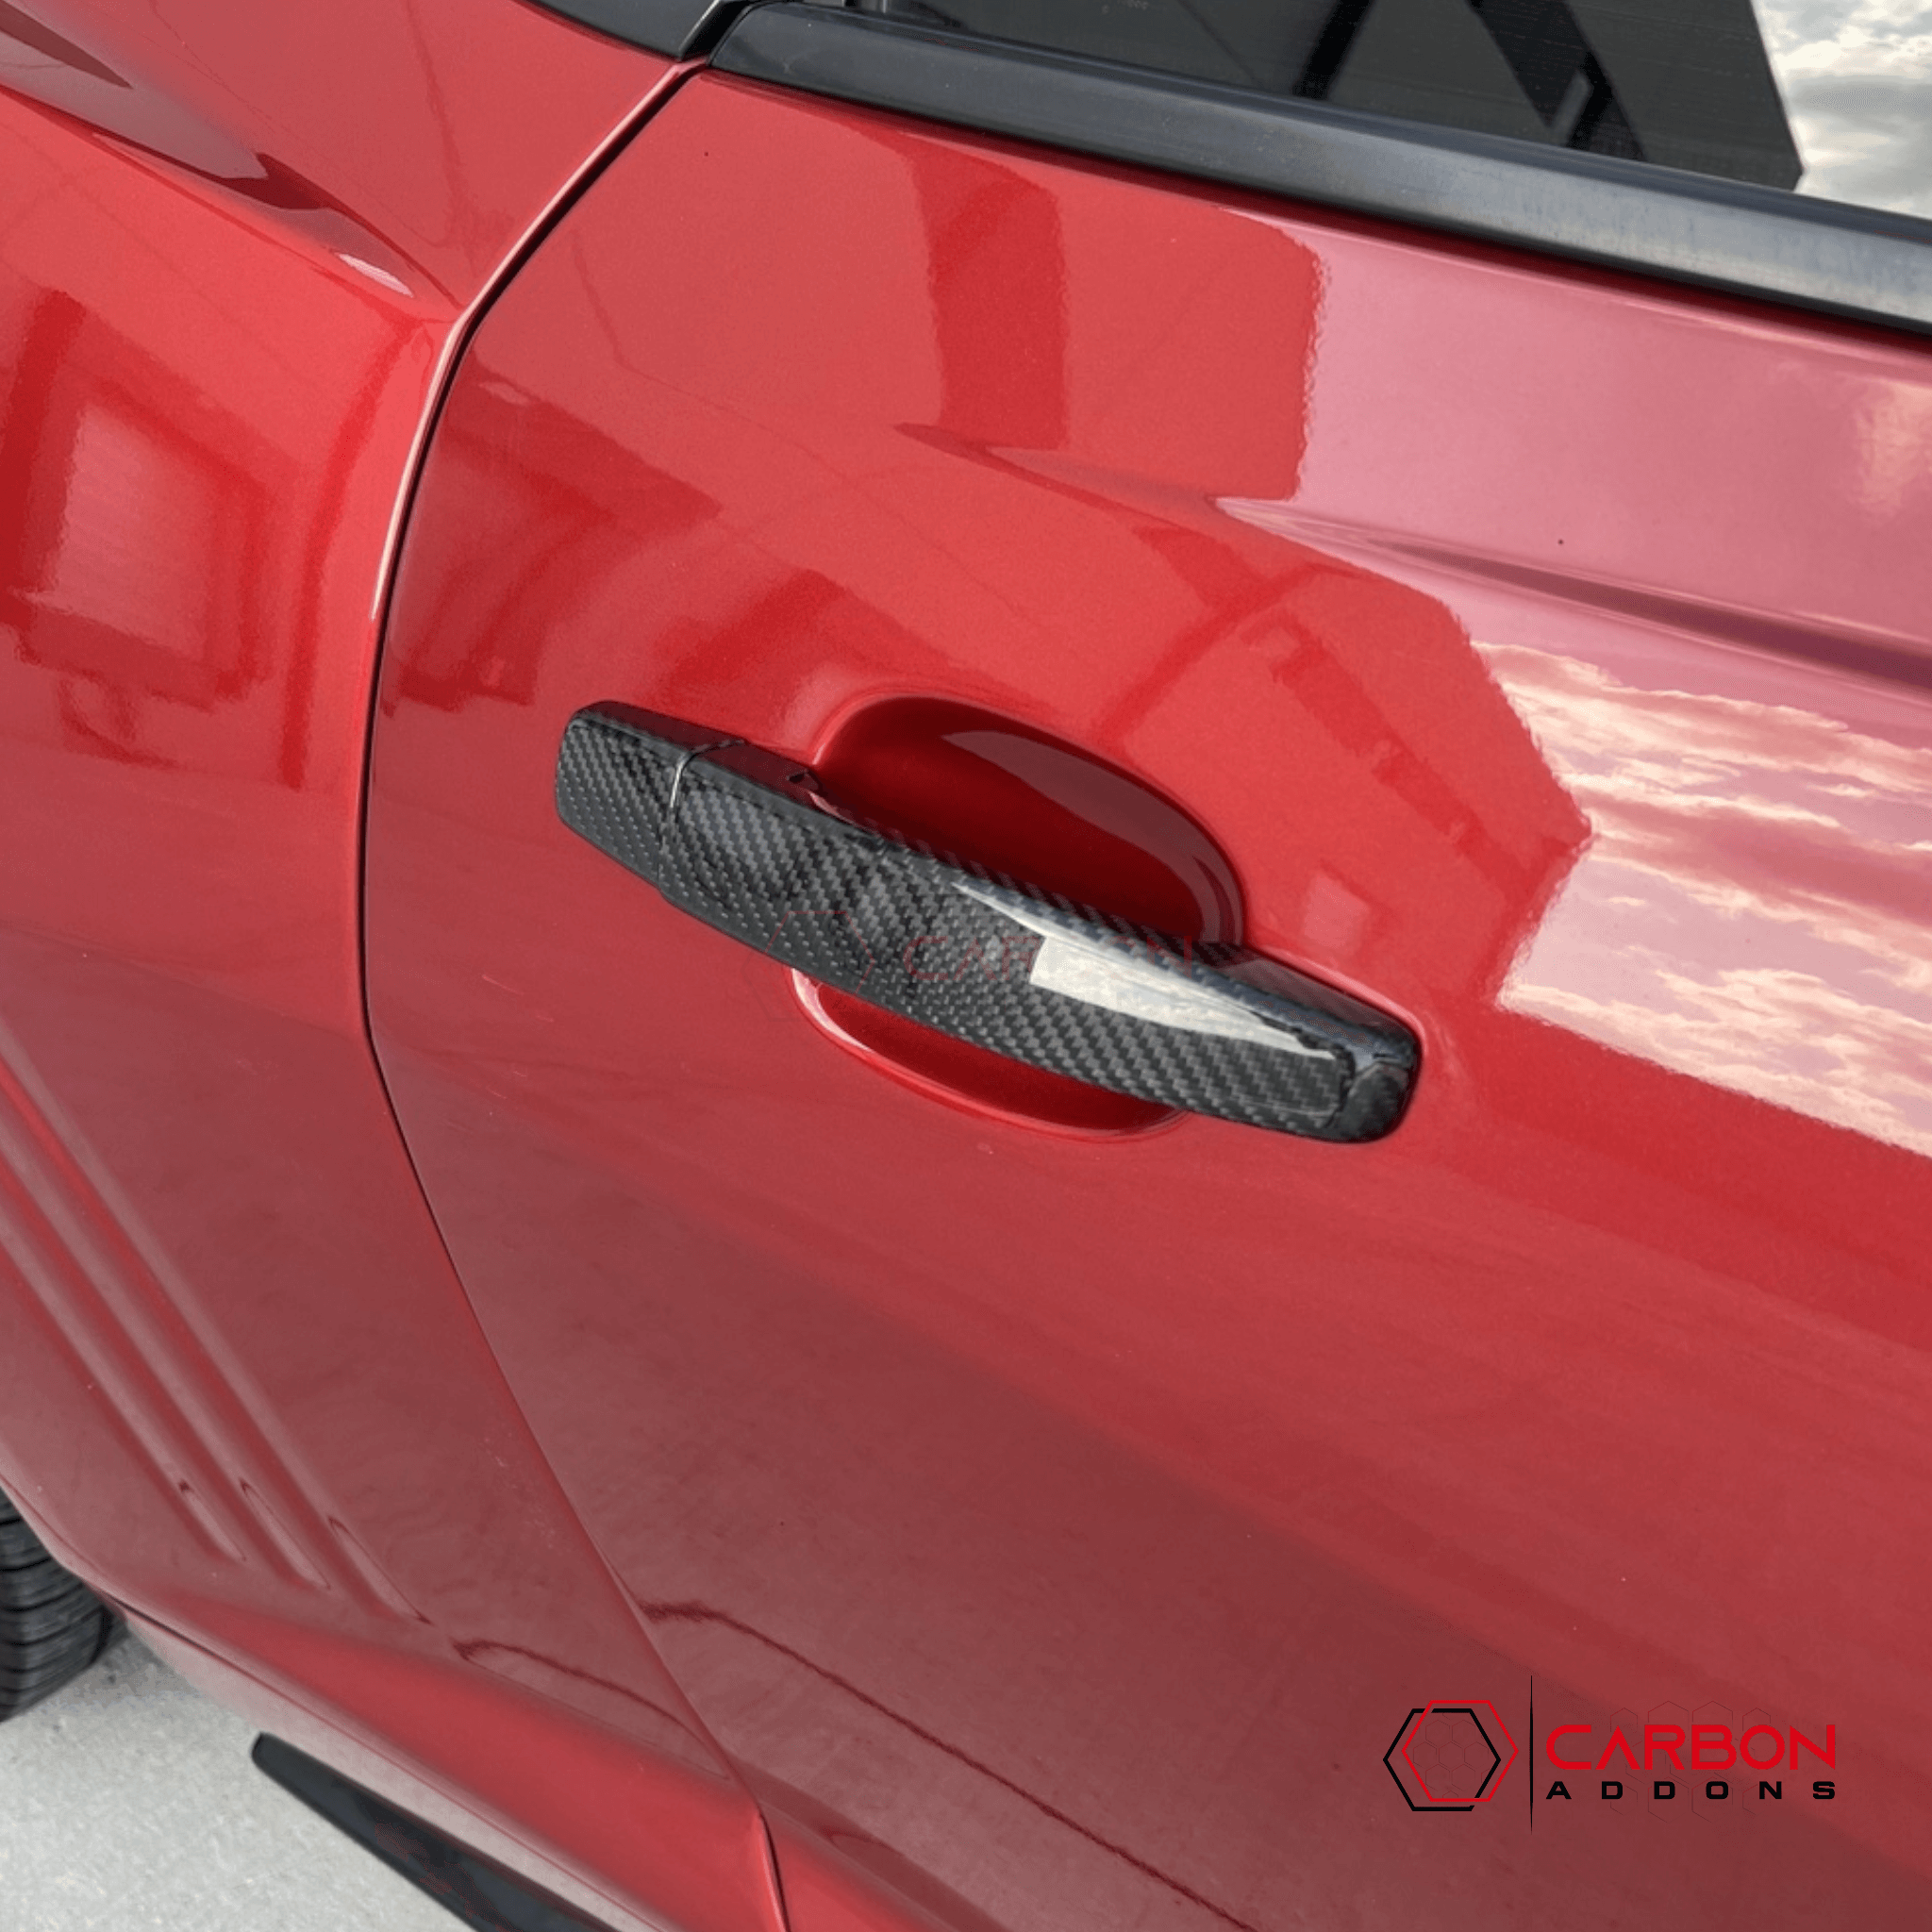 Exterior Carbon Fiber Door Handle Covers for 2010-2015 Chevy Camaro - carbonaddons Carbon Fiber Parts, Accessories, Upgrades, Mods